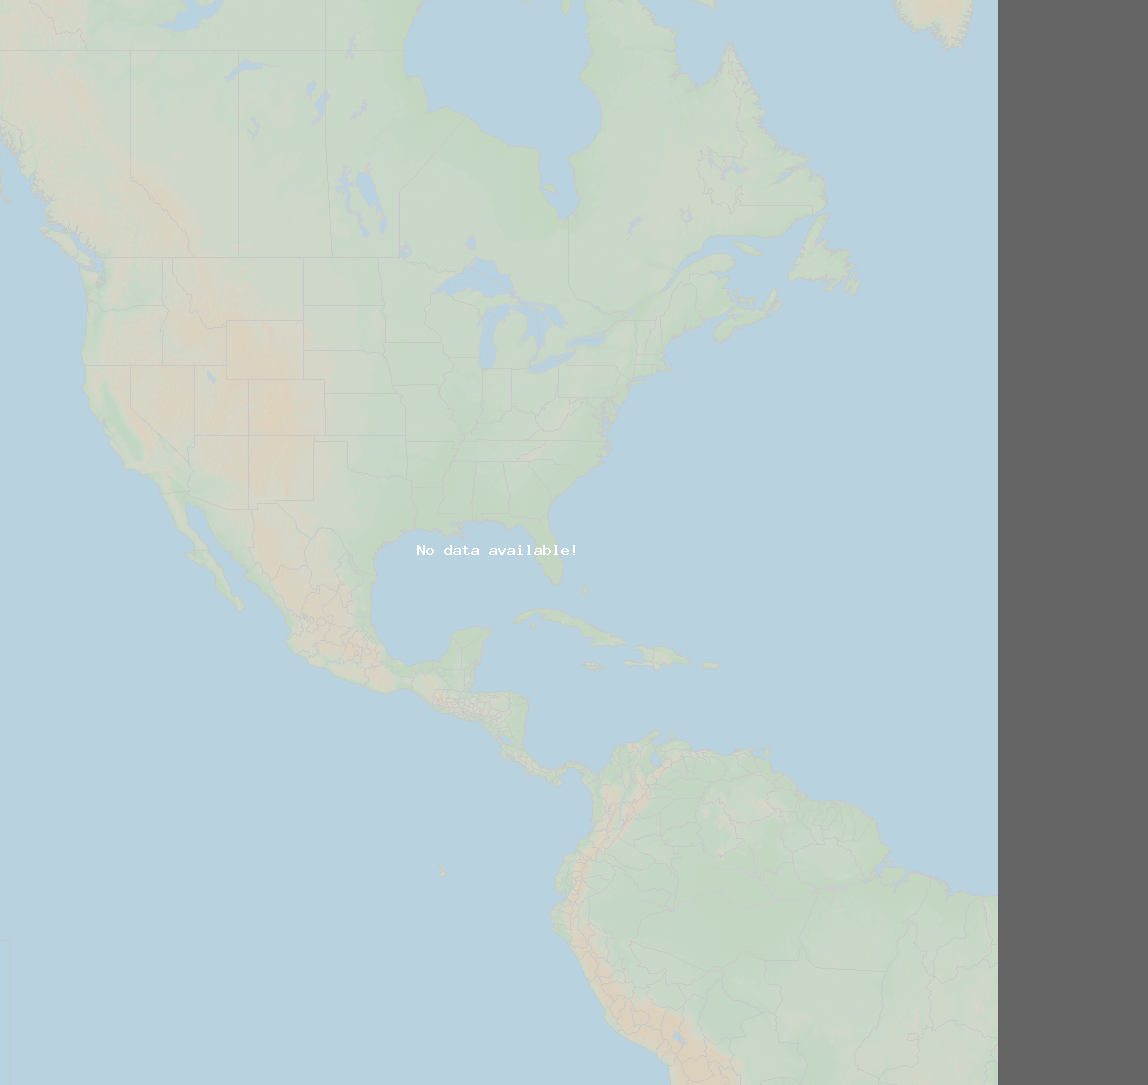 Andel blixtar (Station Lawrence-Dade2) North America 2020 